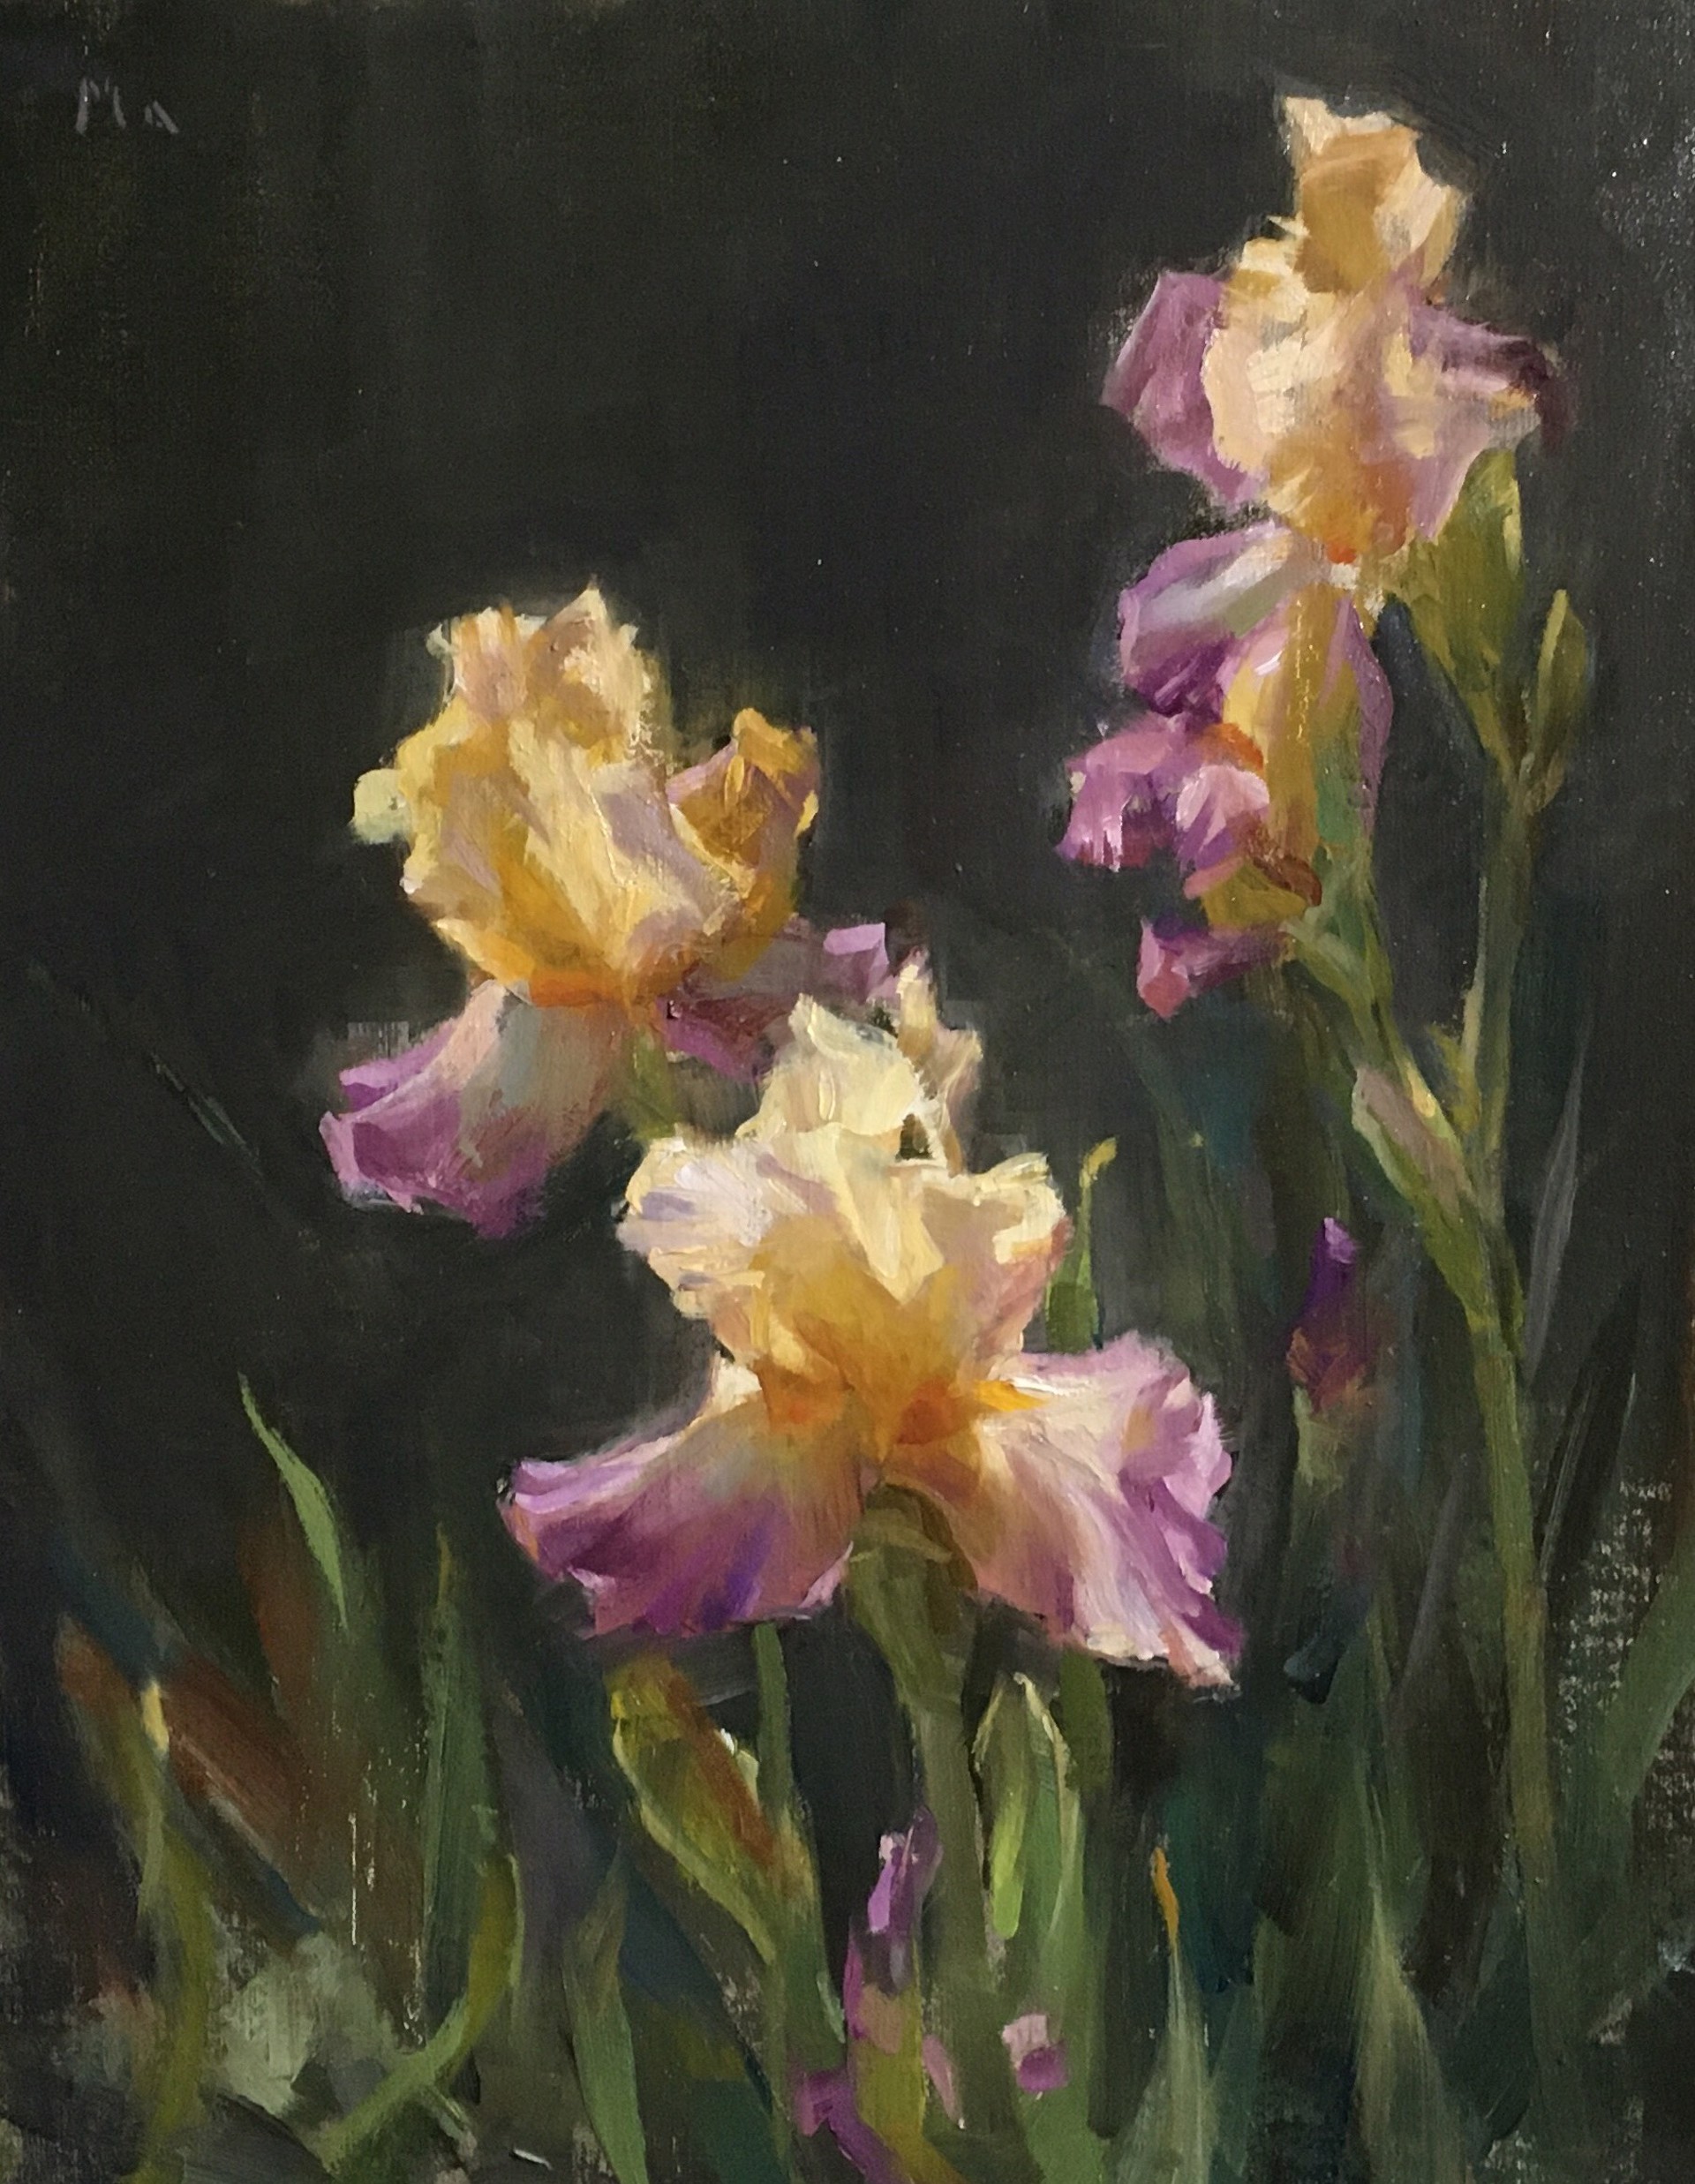 Backlit Irises by Kyle Ma